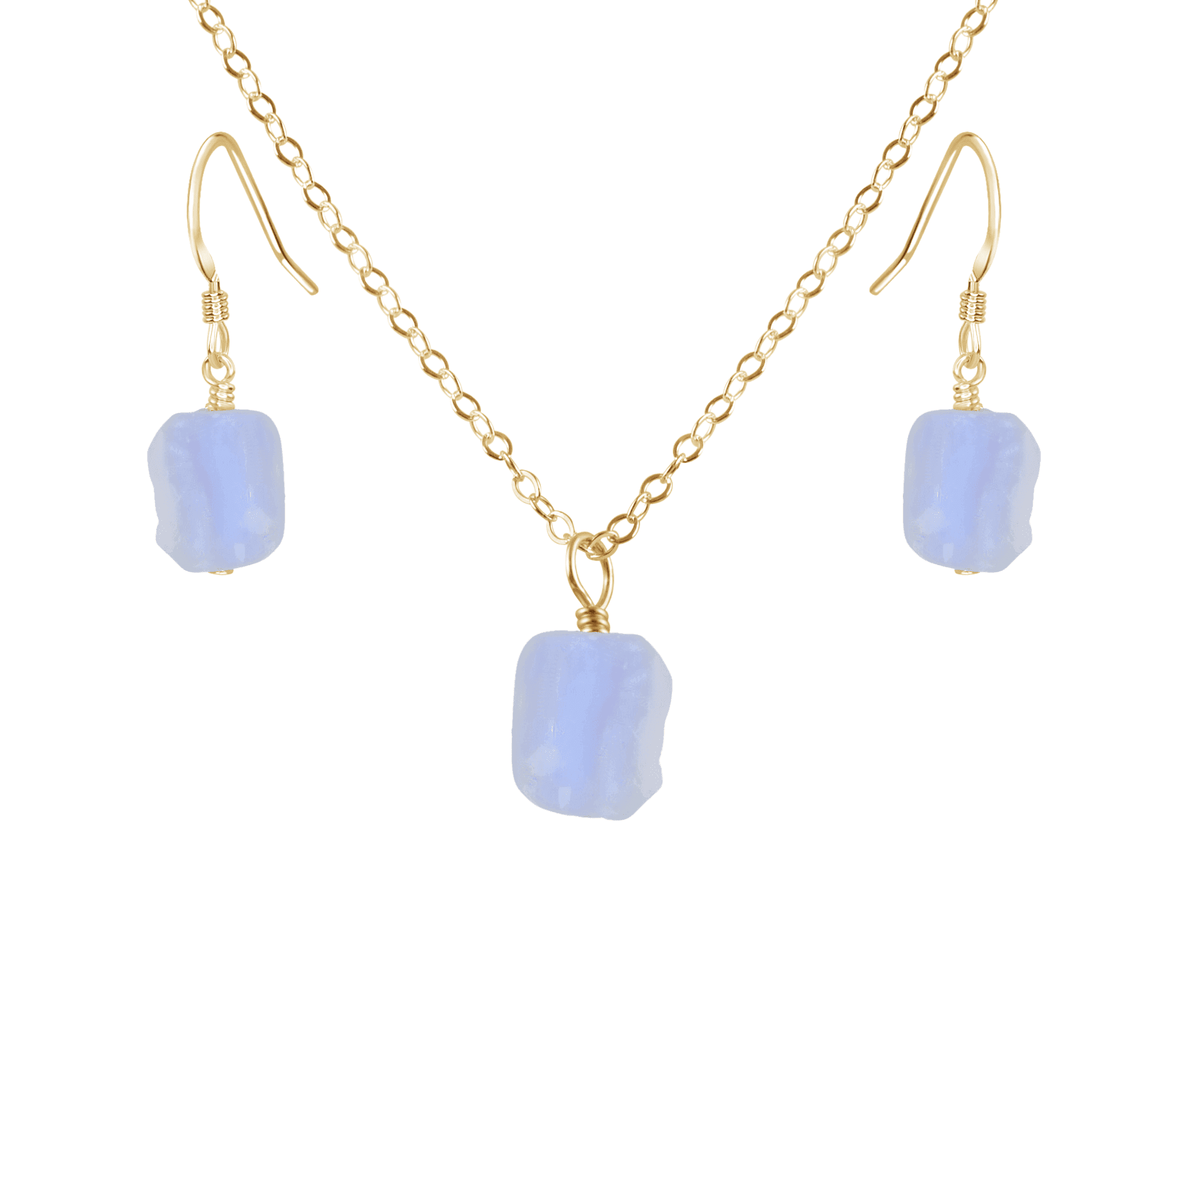 Raw Blue Lace Agate Crystal Earrings & Necklace Set - Raw Blue Lace Agate Crystal Earrings & Necklace Set - 14k Gold Fill - Luna Tide Handmade Crystal Jewellery